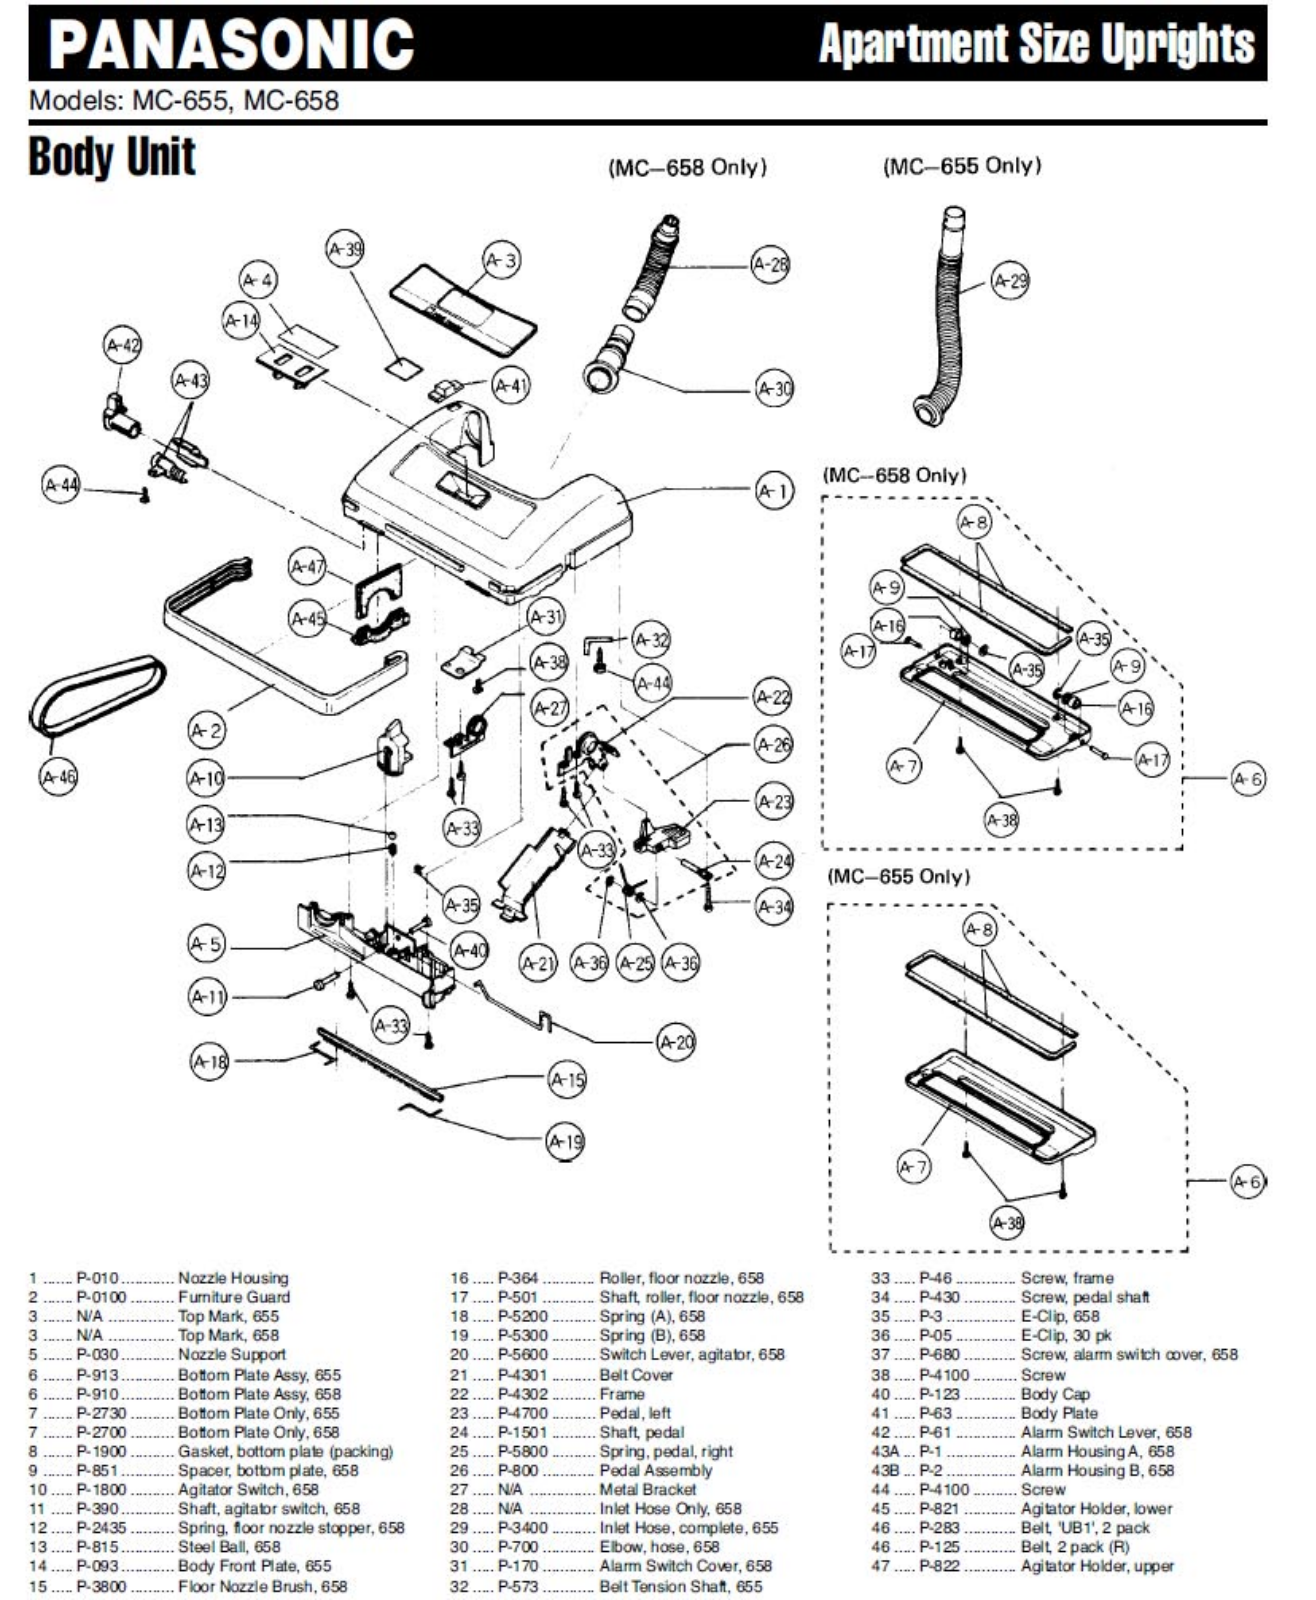 Panasonic 655, 658 Parts List